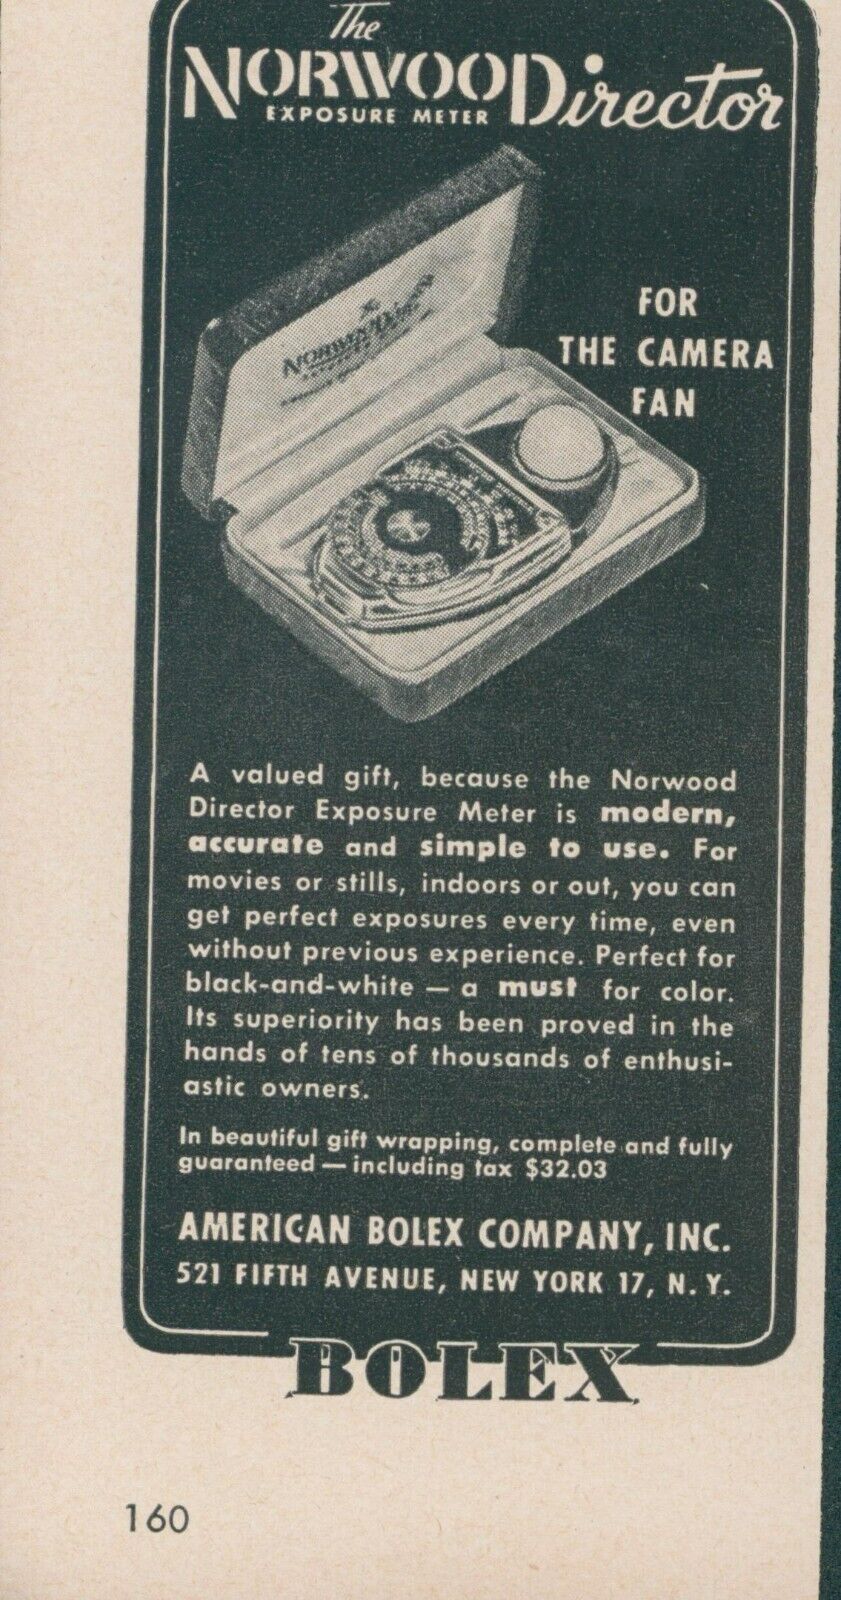 1948 Bolex Norwood Director Exposure Meter Camera Fan Vintage Print Ad L13